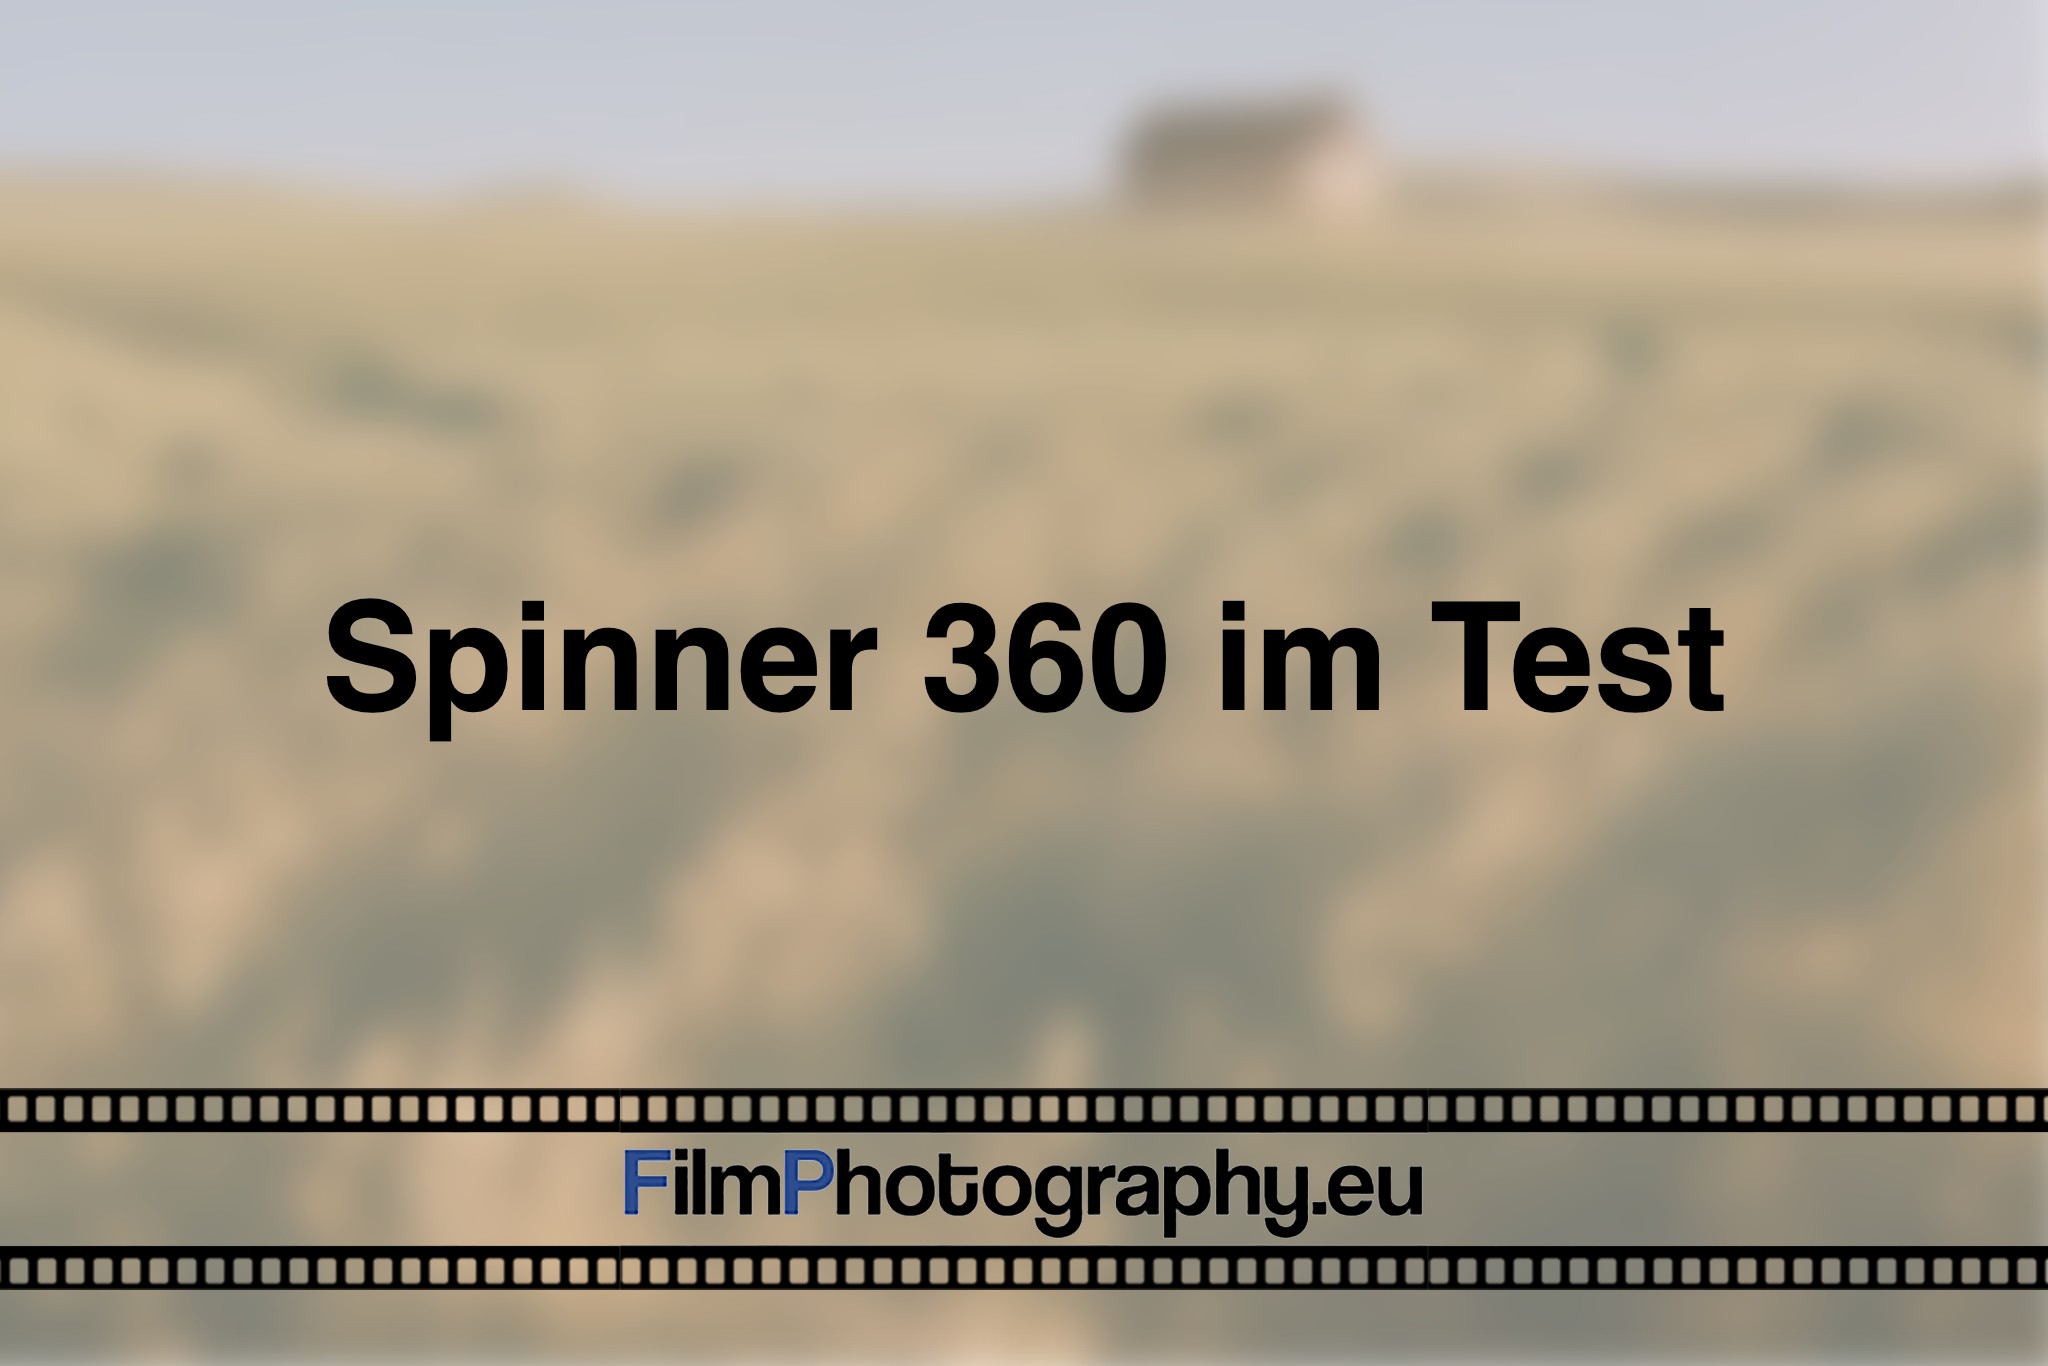 spinner-360-im-test-photo-bnv